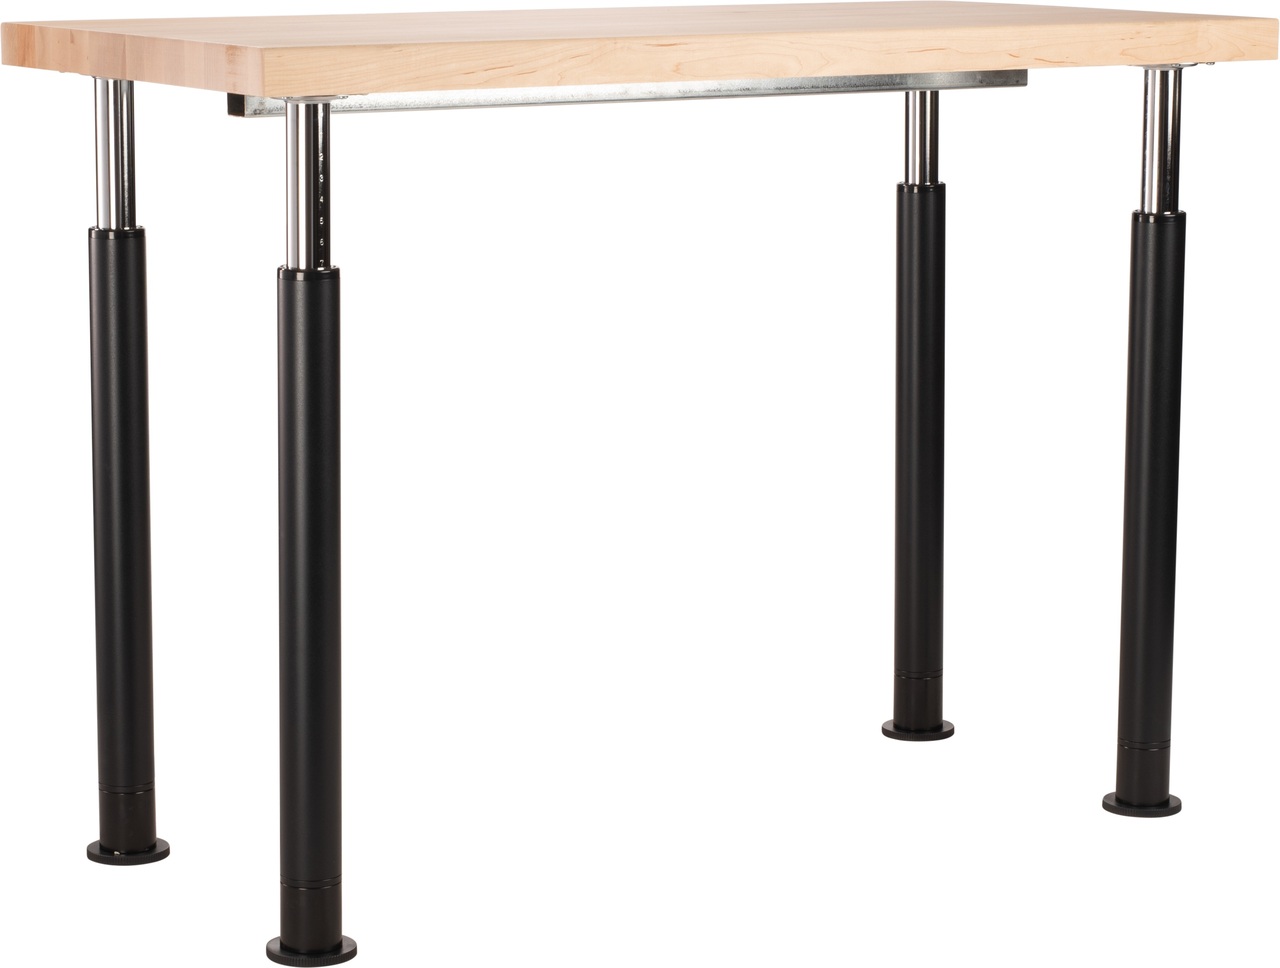 NPS Designer Science Table, 24"x48", Butcherblock Top - Maple Top and Black Leg